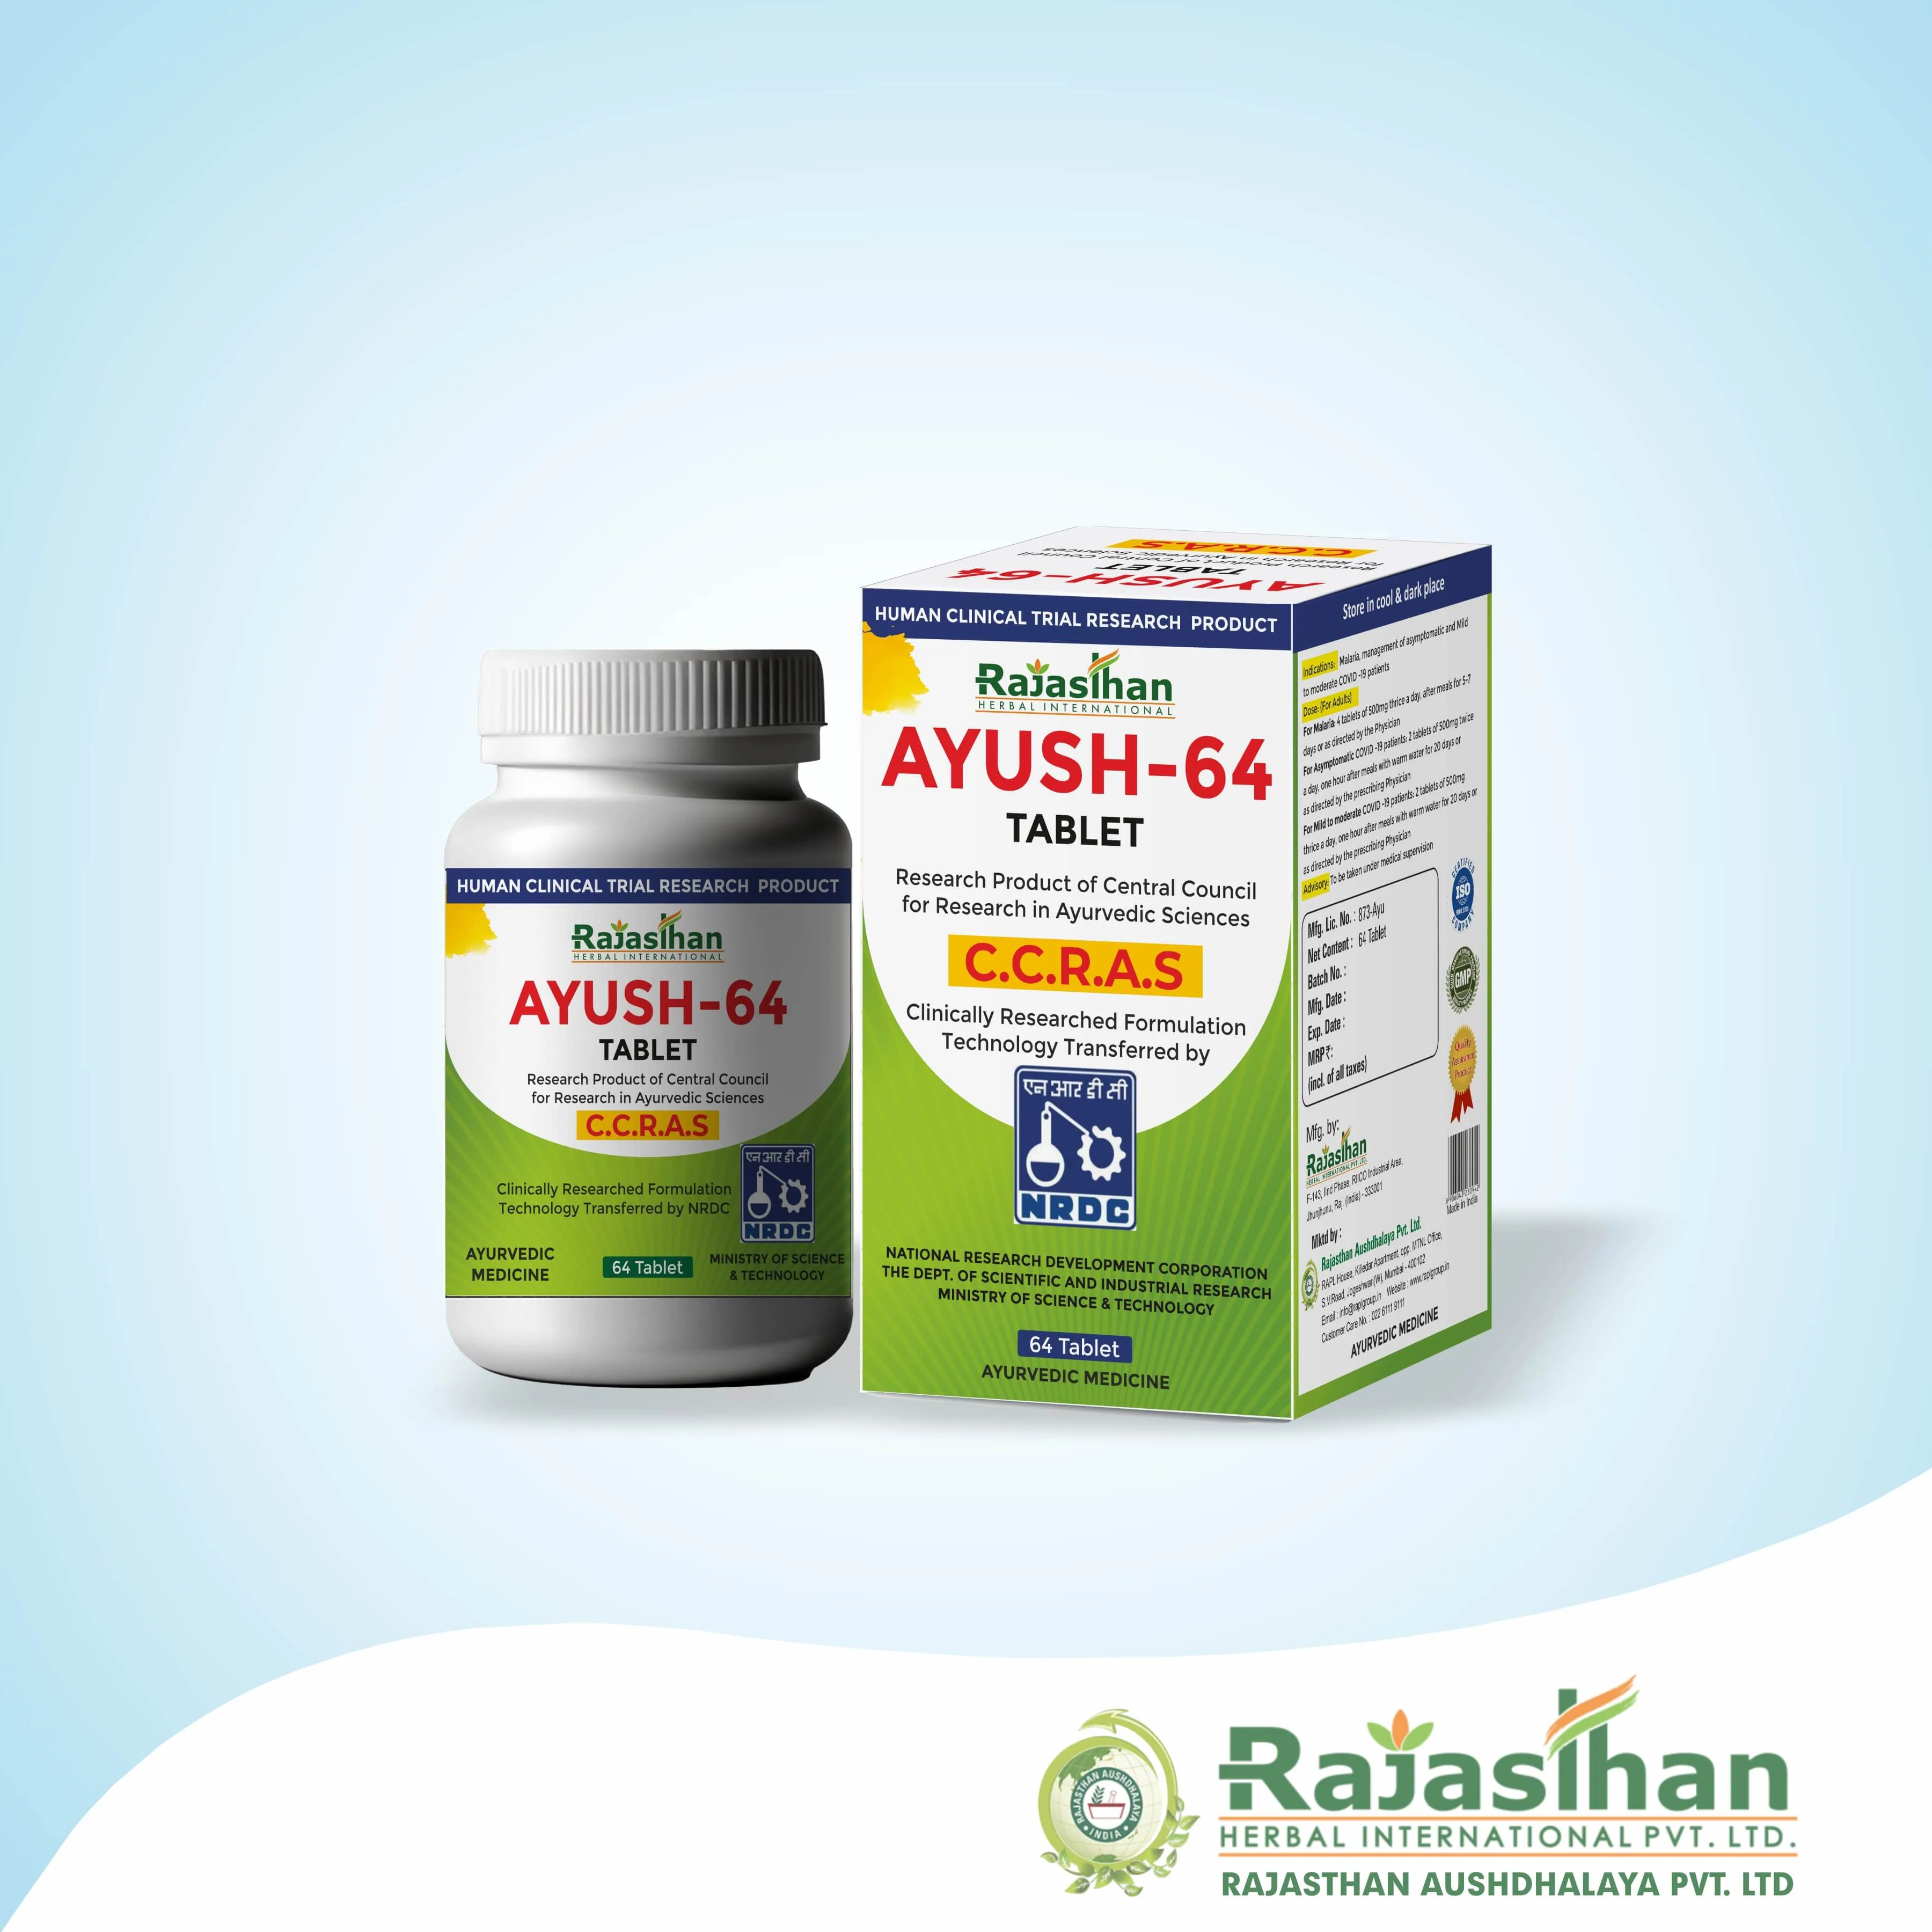 Rajasthan Herbals Ayush 64 Tablet